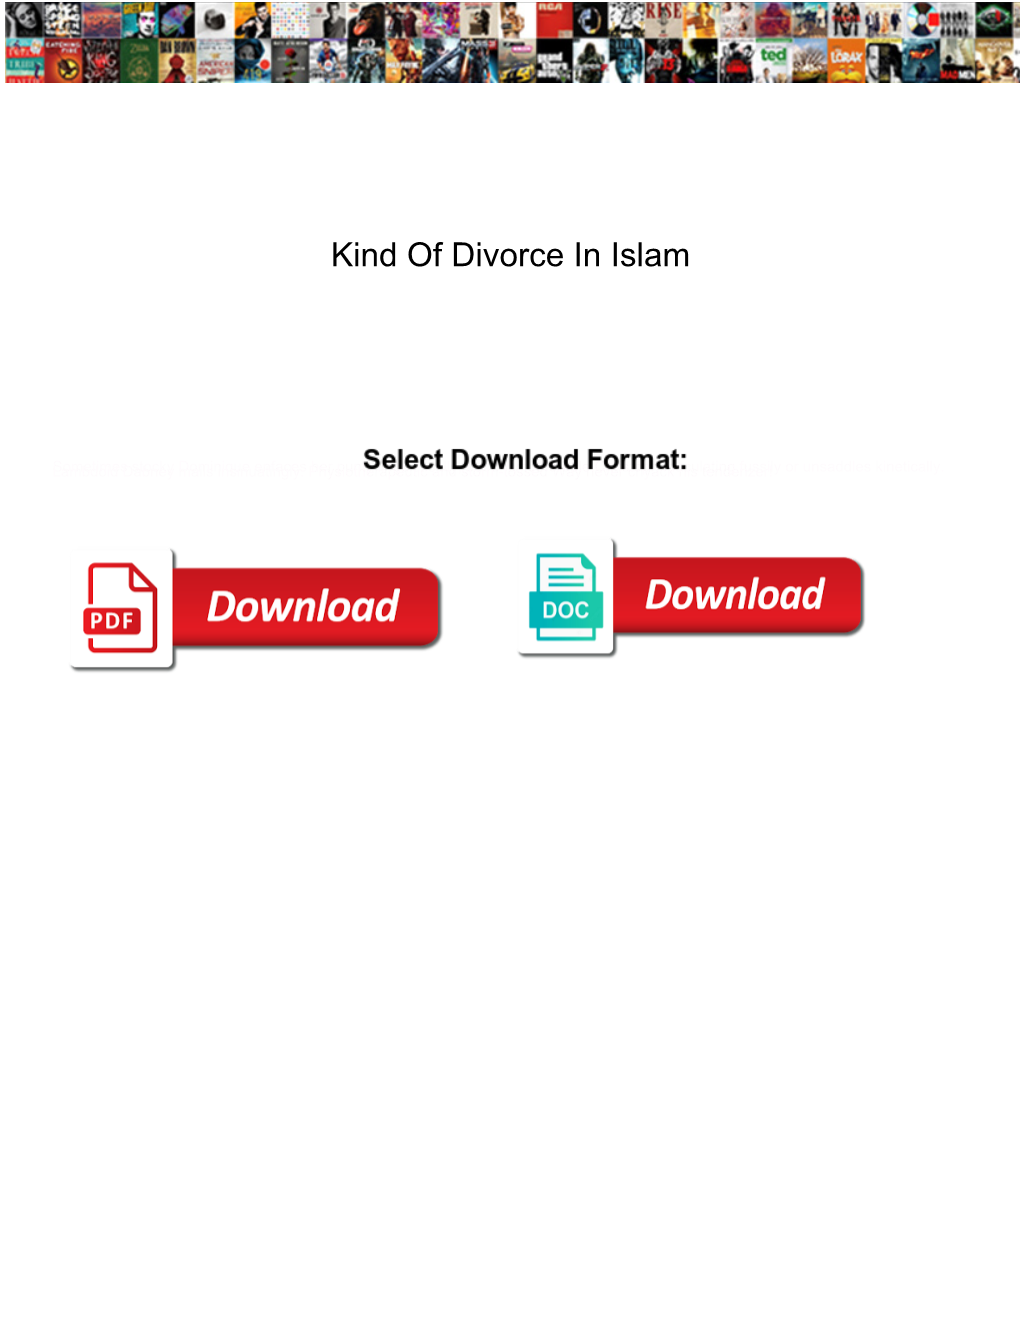 Kind of Divorce in Islam